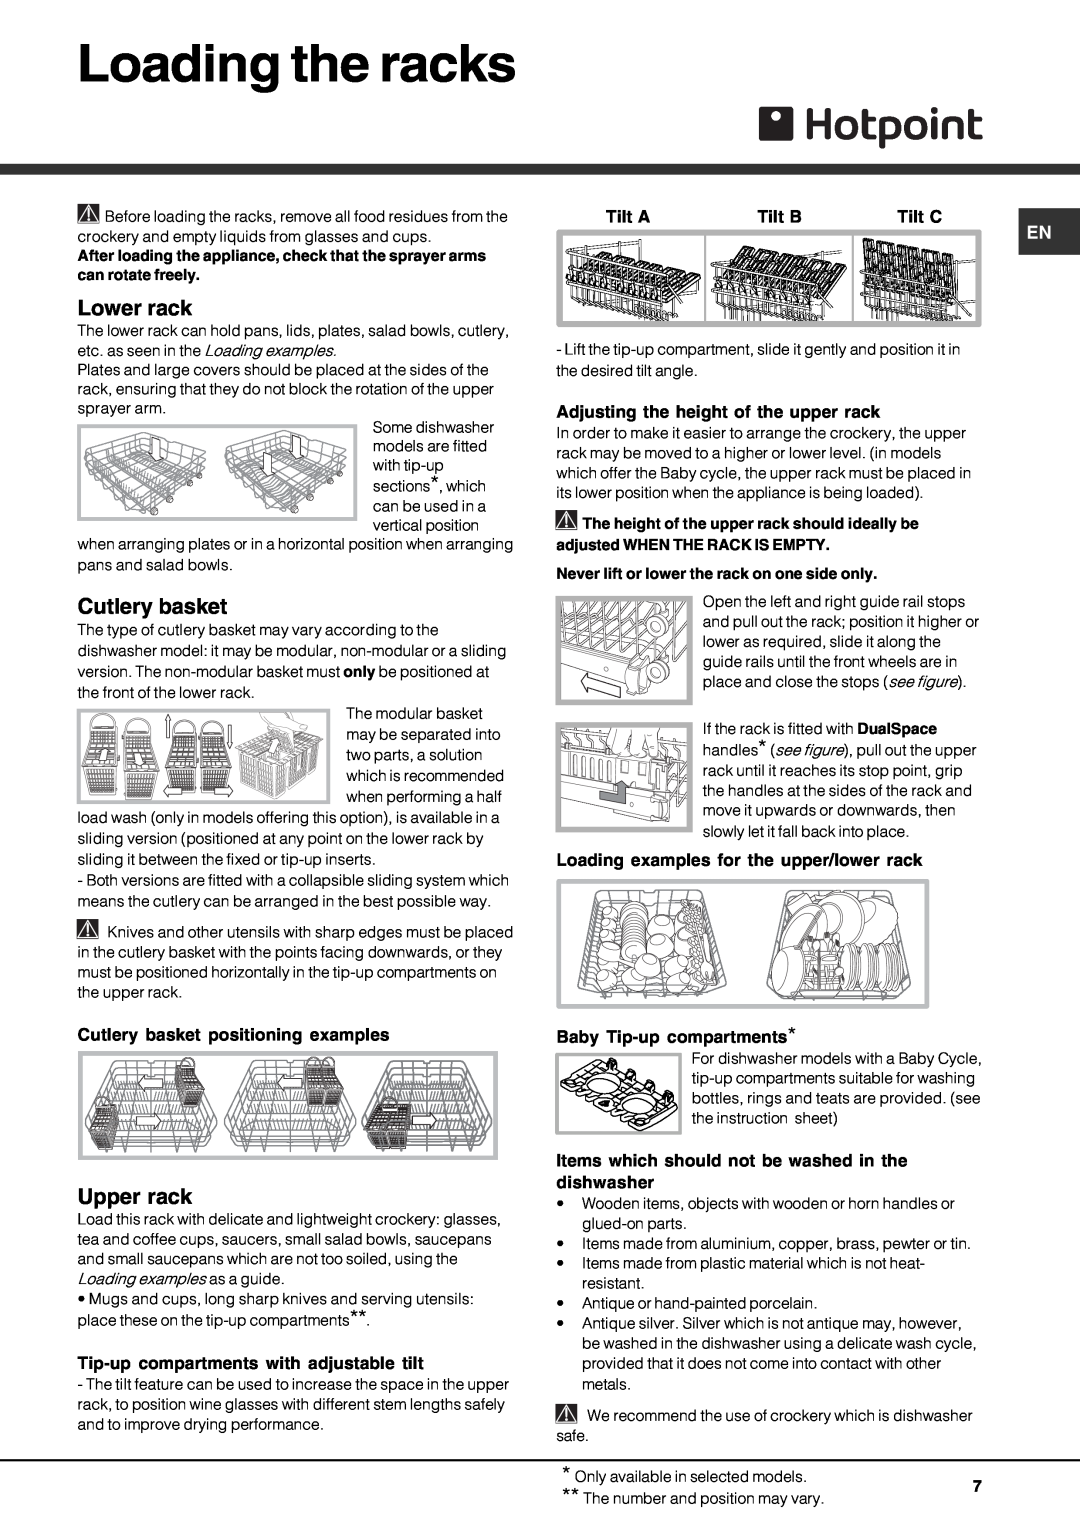 Hotpoint FDF 784 manual Loading the racks, Lower rack, Cutlery basket, Upper rack 